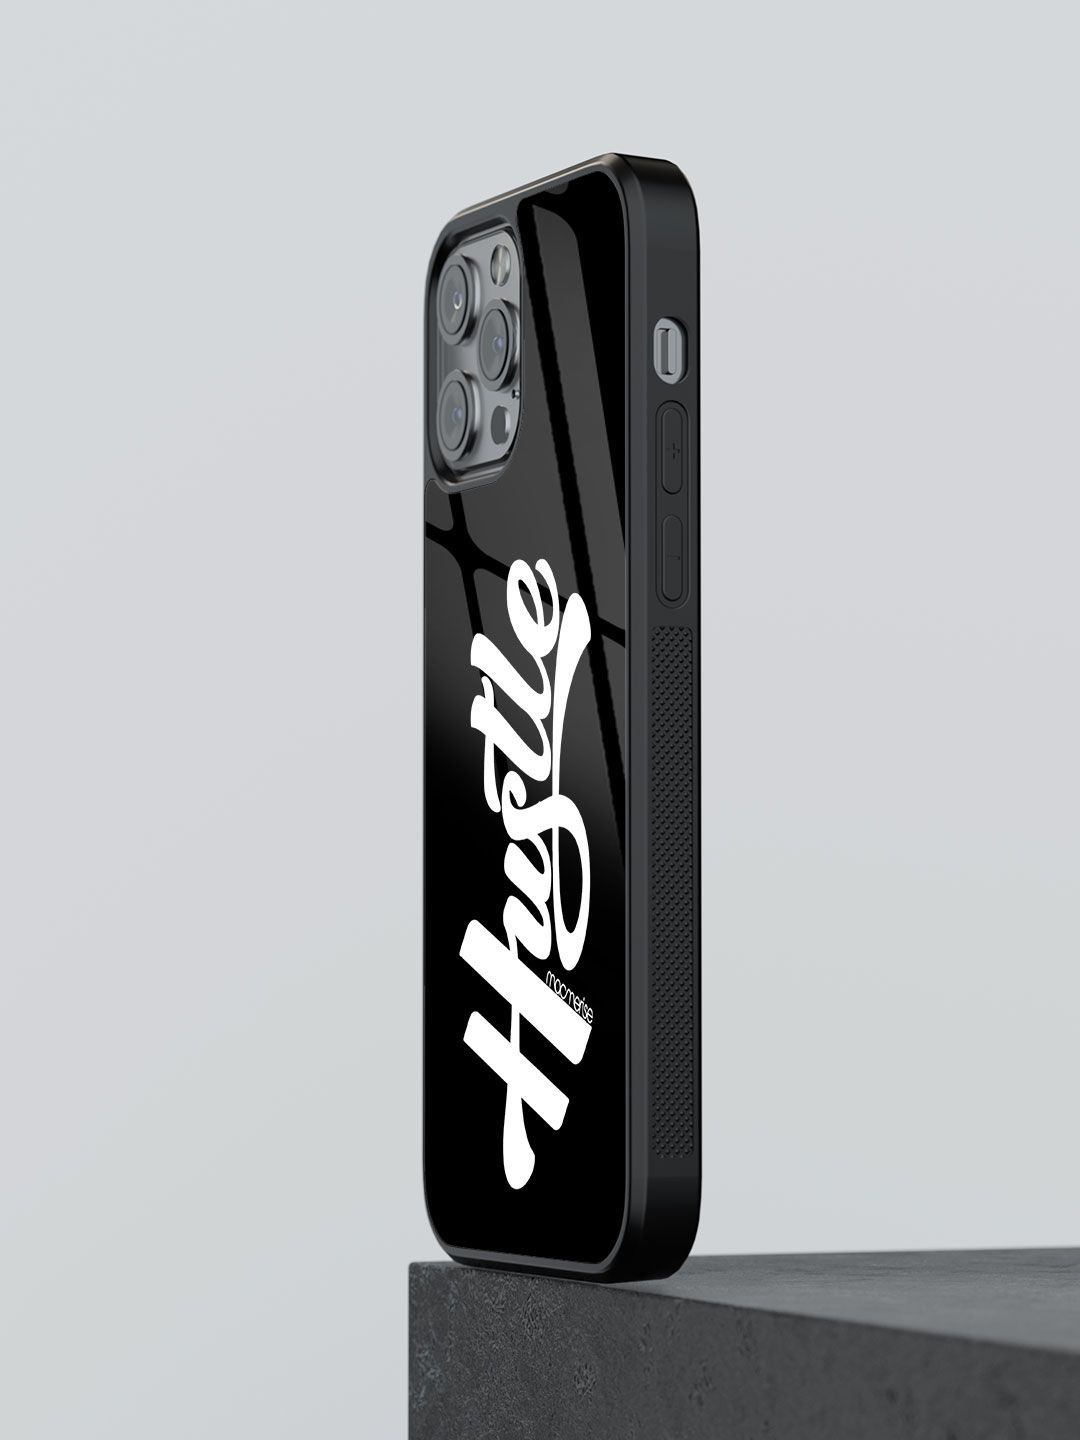 macmerise Black & White Hustle iPhone 12 Pro Max Back Case Price in India